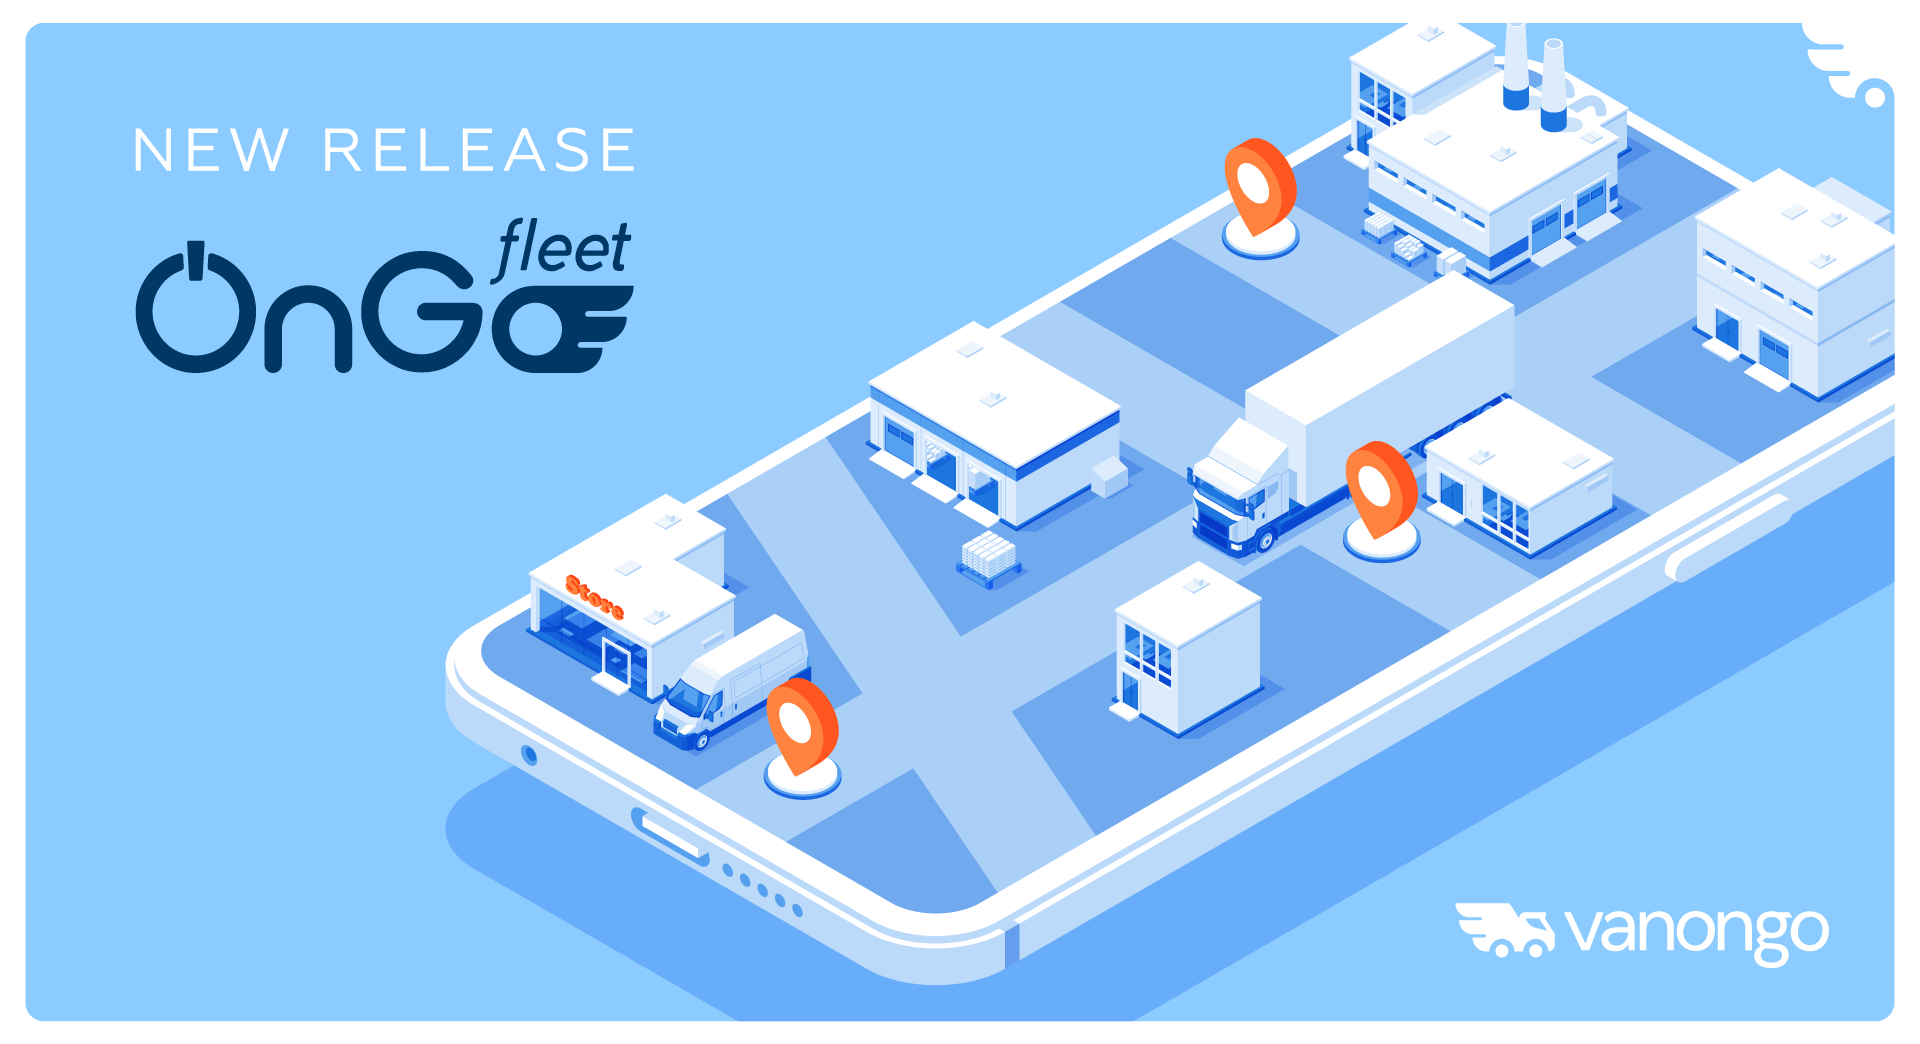 OnGo Fleet release